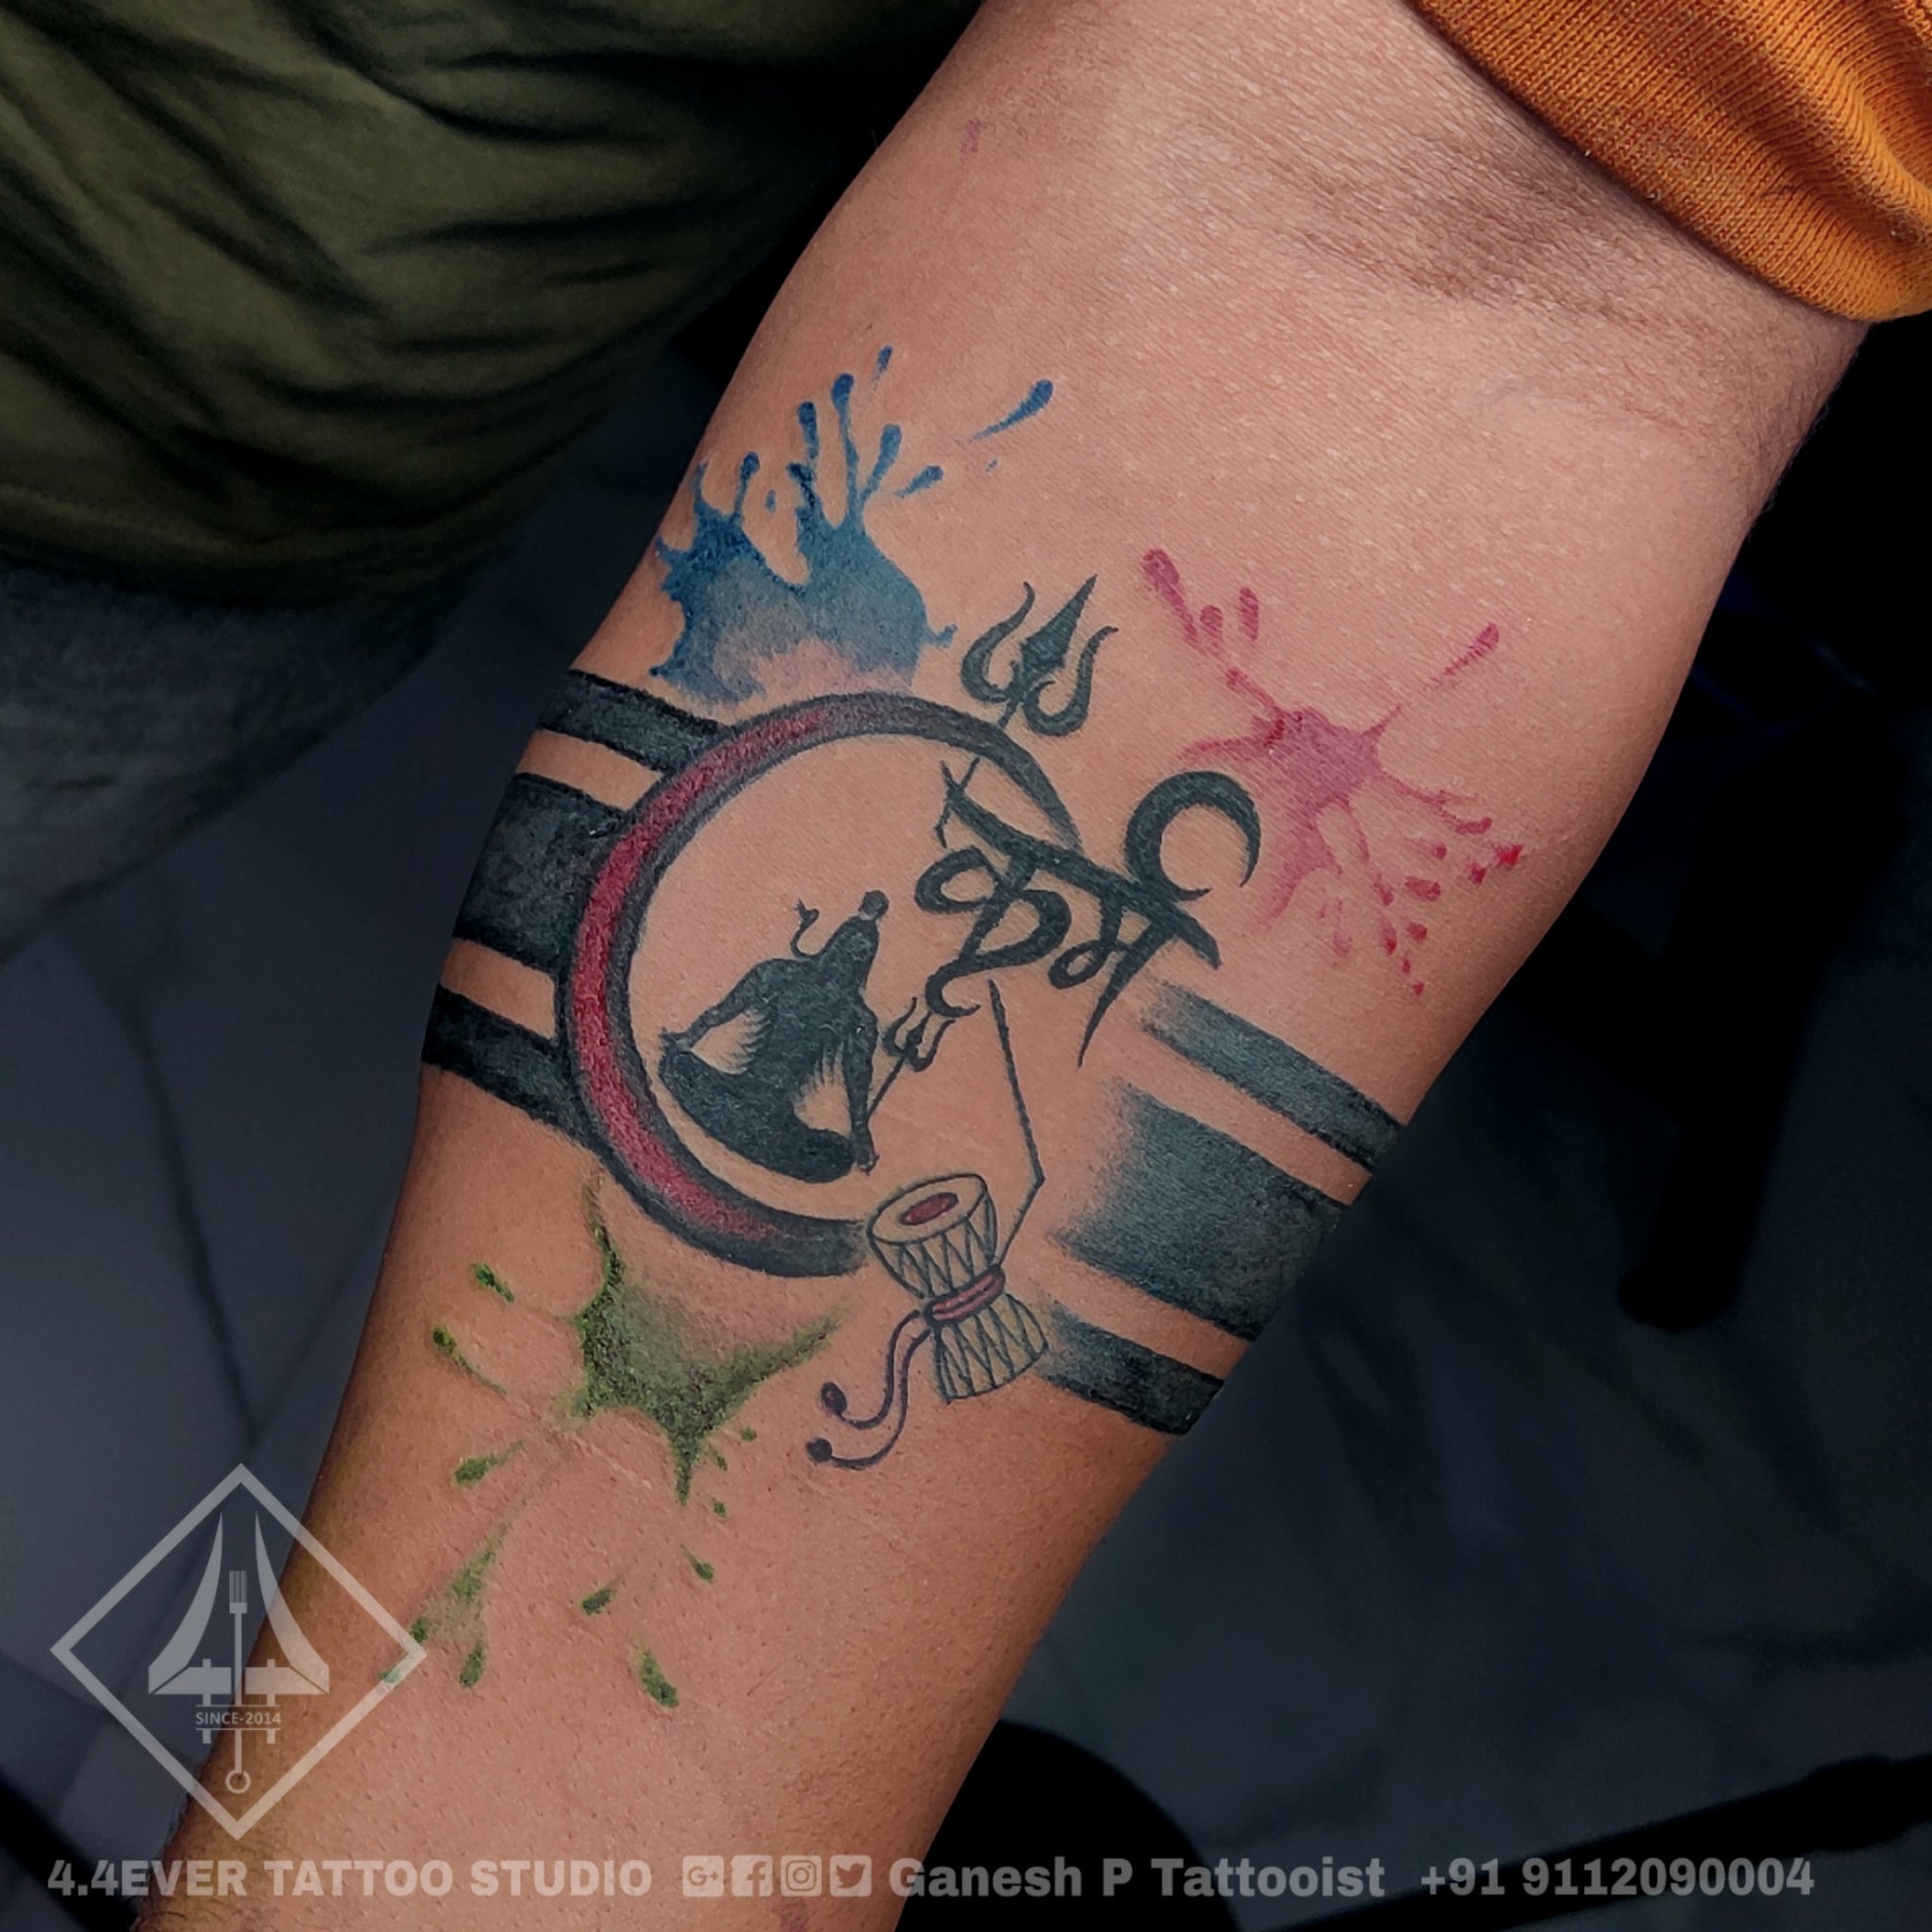 Ganesh P Tattooist on Twitter Trishul Band Tattoo tattoo design by  ganeshptattooist nanded triahul Band bandtattoo rudrakshtattoo om  omtattoo bandtattoos mahakal mahadev omnamahshivaya shiva shivay   nandedcity nandeddiaries 